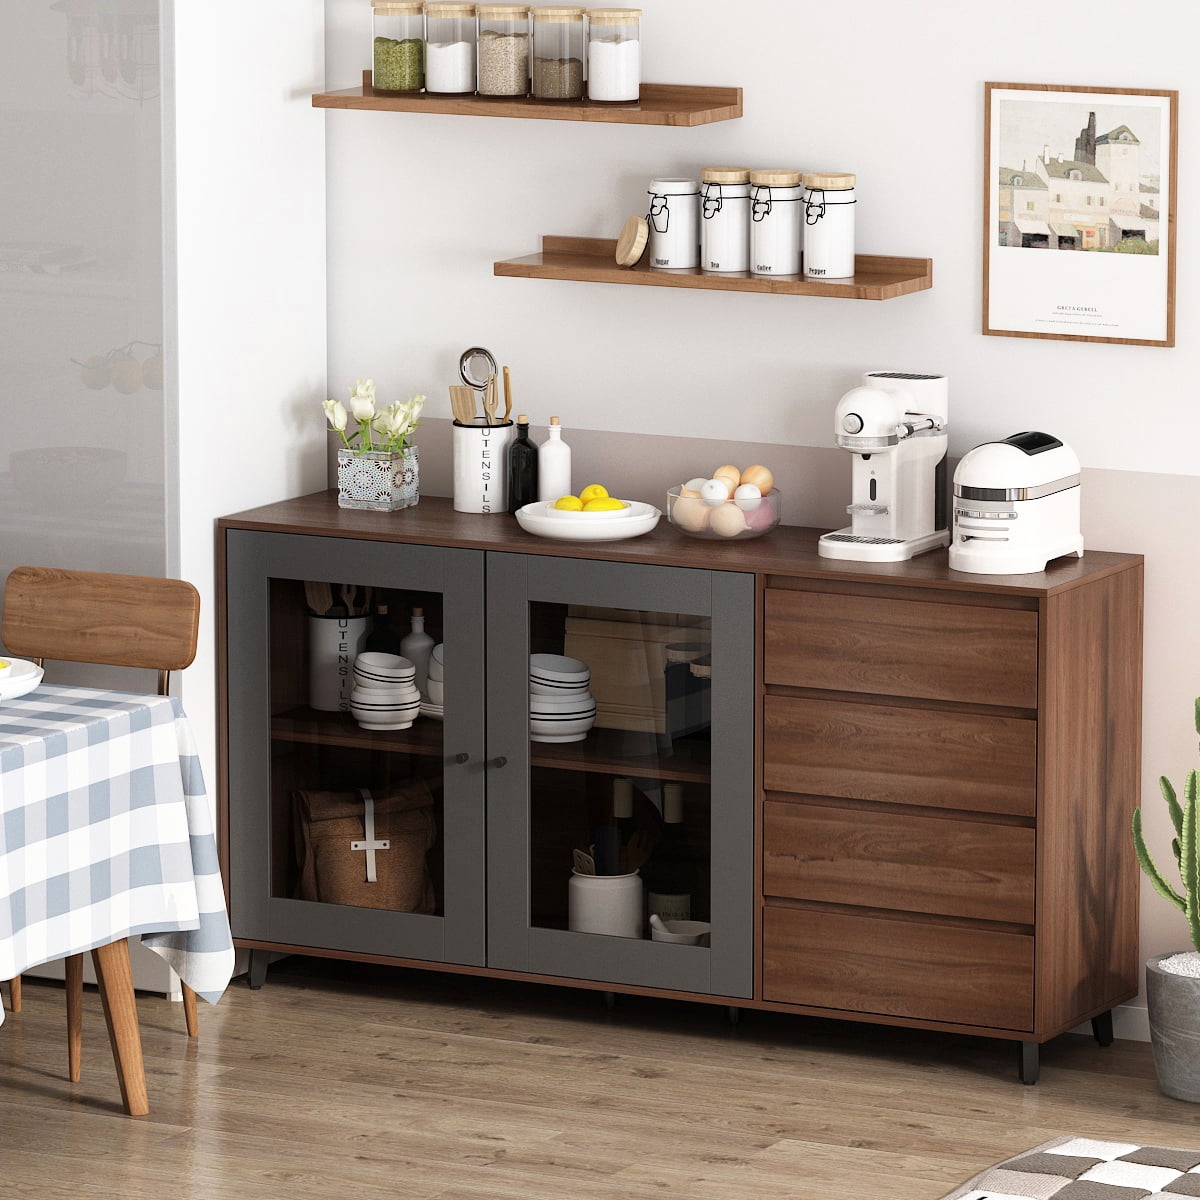 Storage Cabinets, Cupboards, Sideboards - IKEA